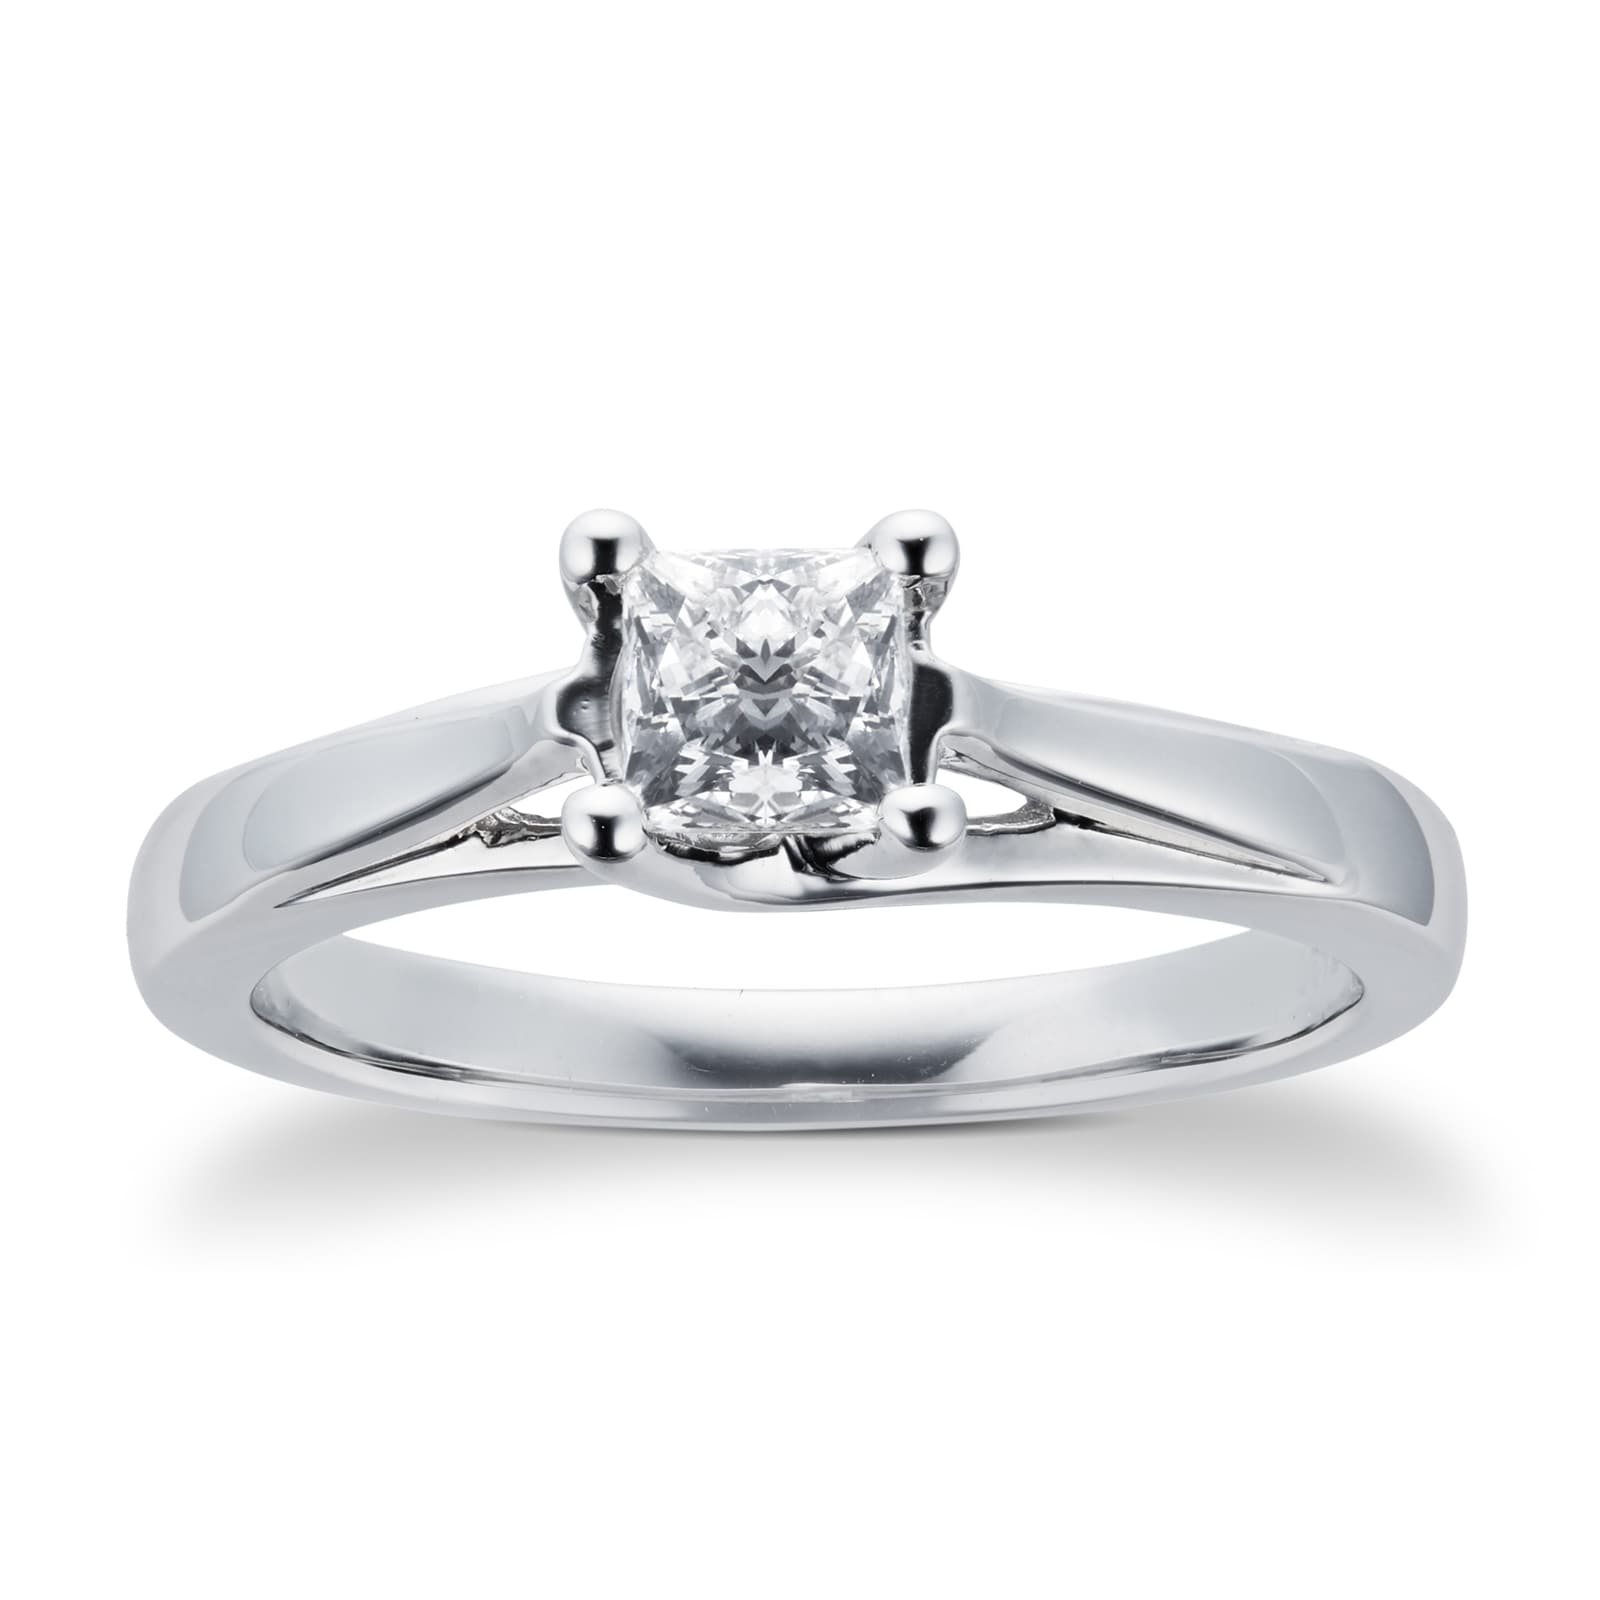 Platinum Princess Cut 0.50 Carat 88 Facet Diamond Ring - Ring Size Q